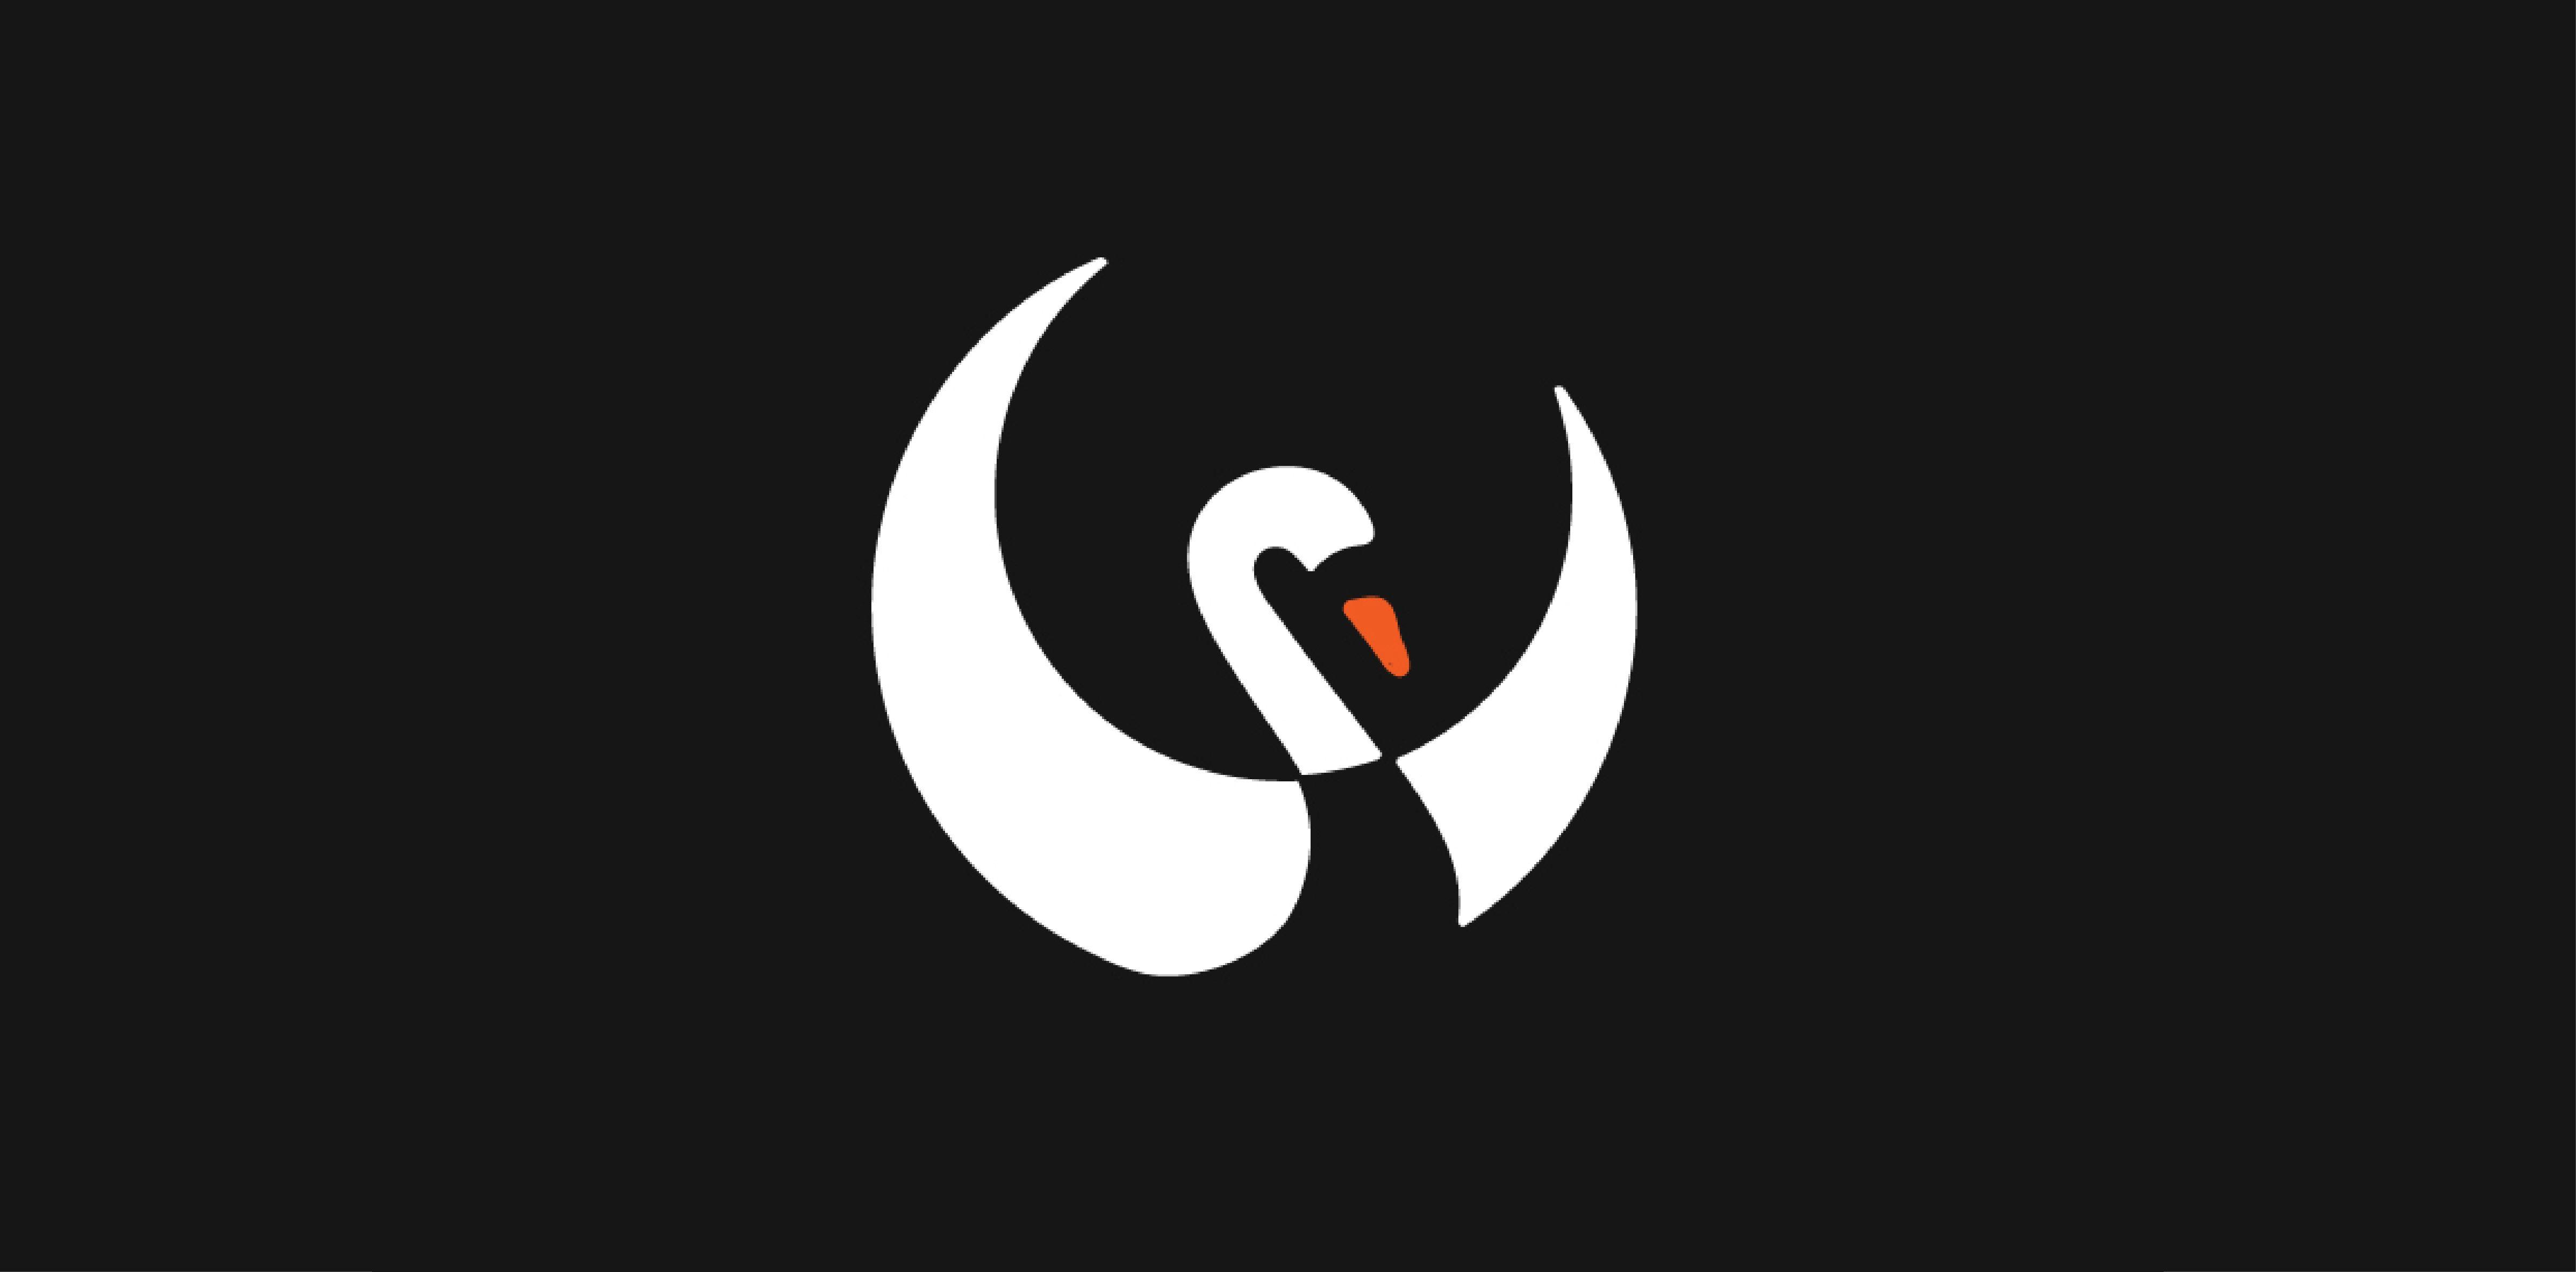 Logos with a Swan Logo - swan logo animal design water luxe mark | LogoMoose - Logo Inspiration